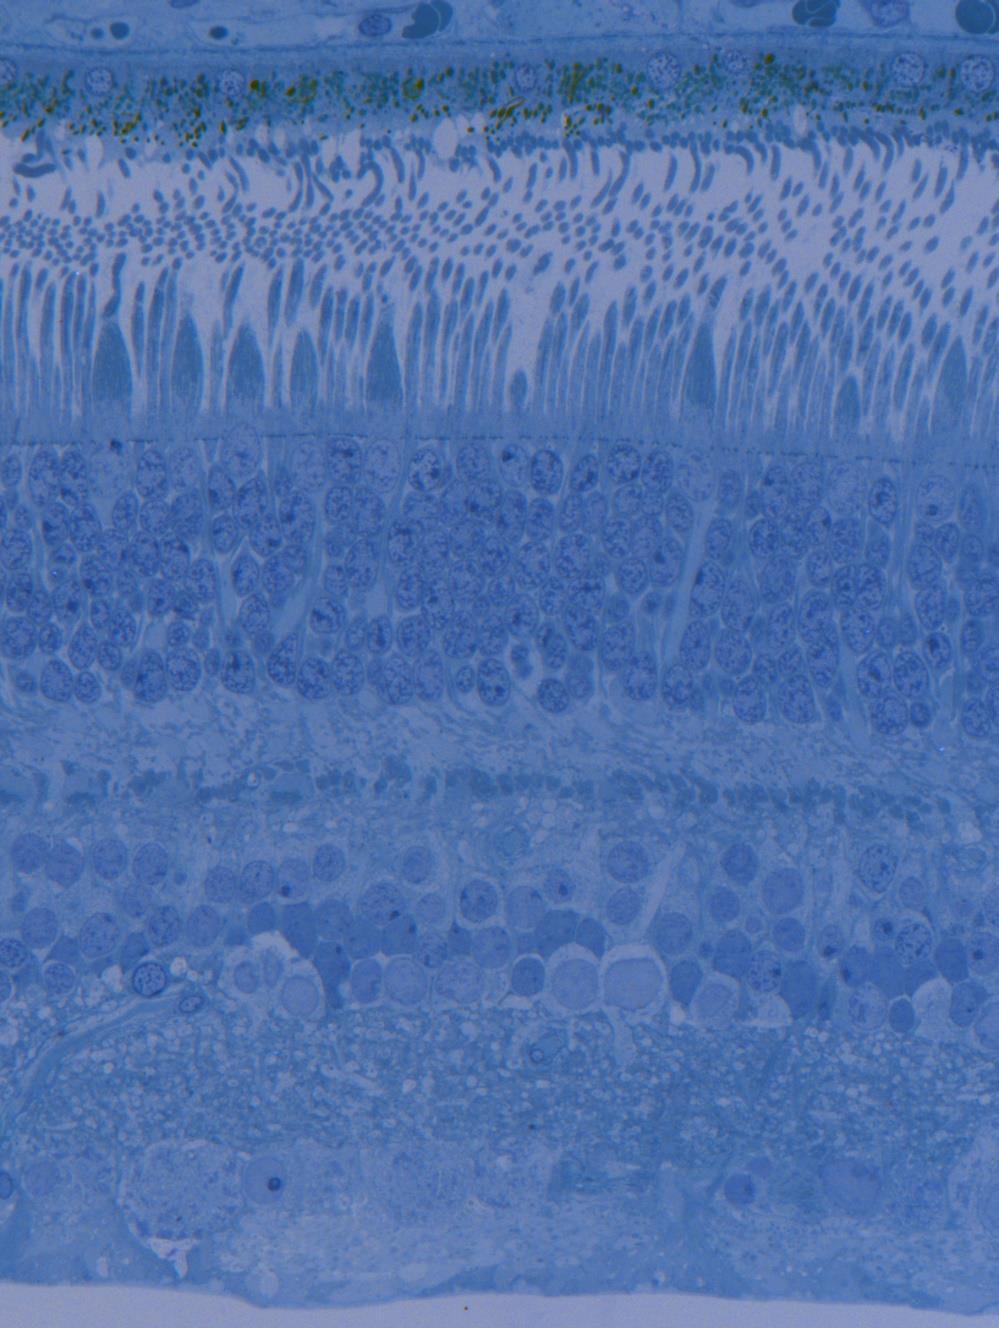 Pars optica retinae Pigmentepithel Str. neuroepiheliale (Außensegmente) Str. neuroepiheliale (Innensegmente) Membrana limitans ext. Str. granulosum ext.